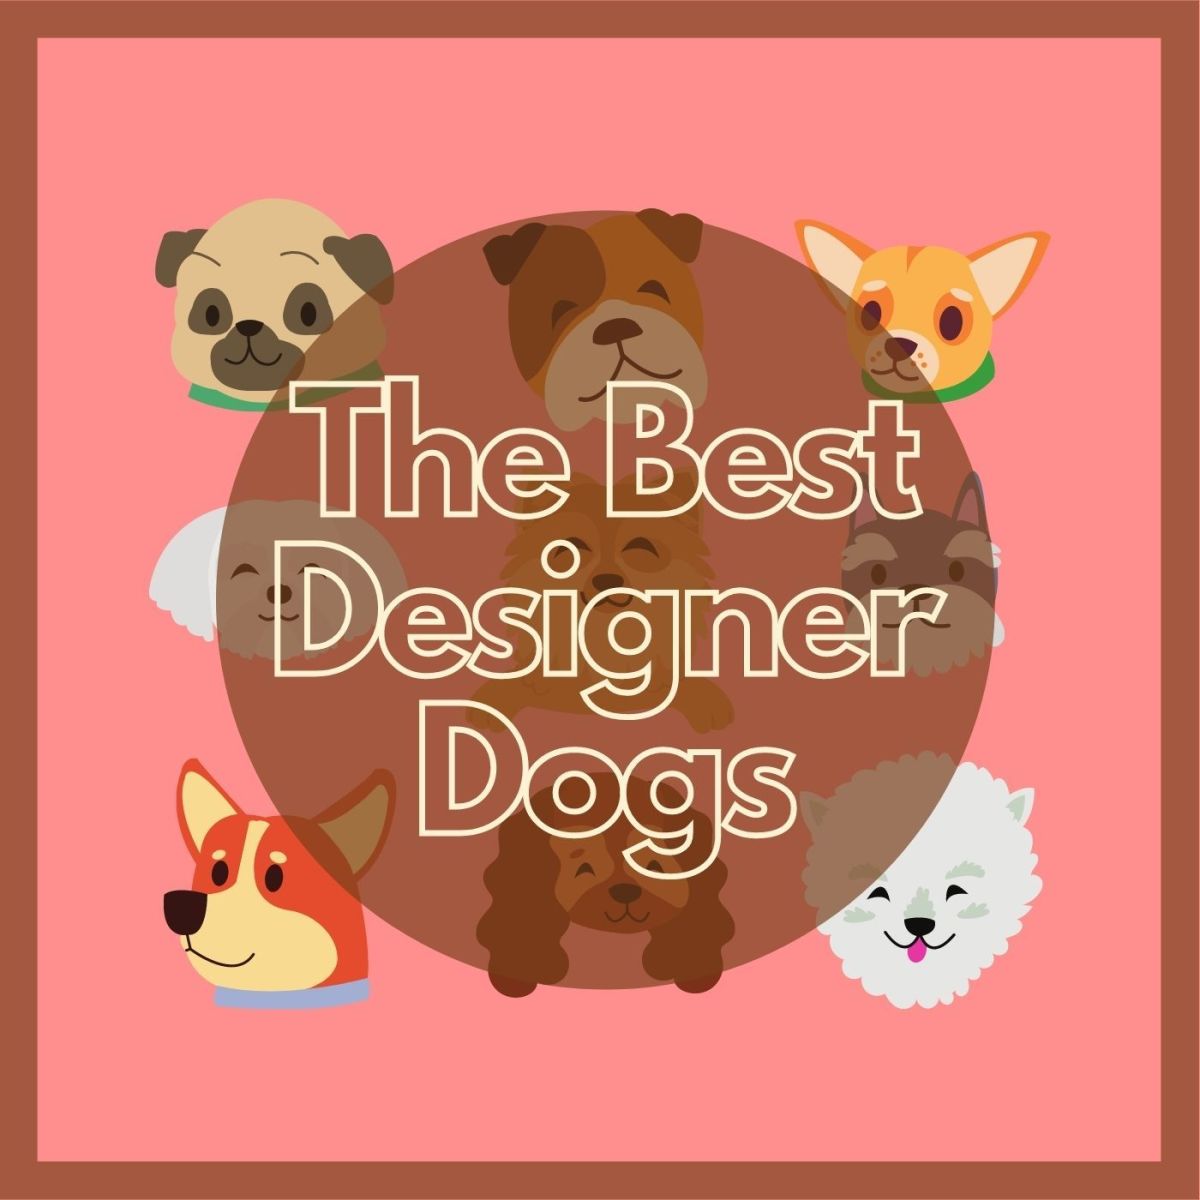 Do you love designer dogs?